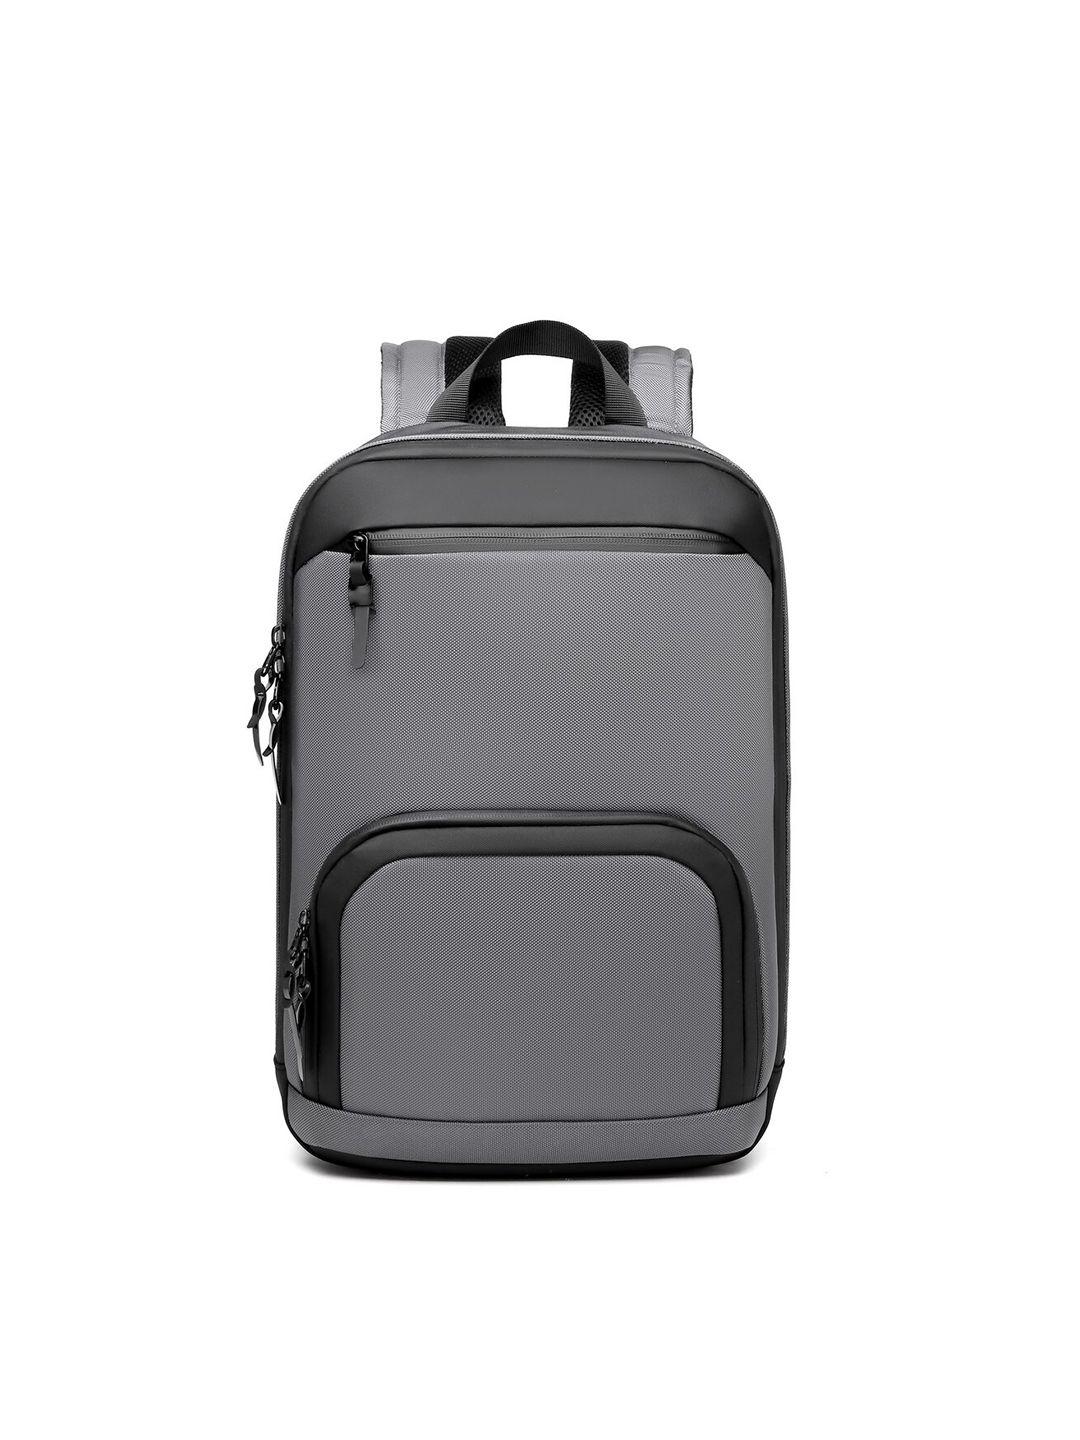 ozuko-textured-core-backpack